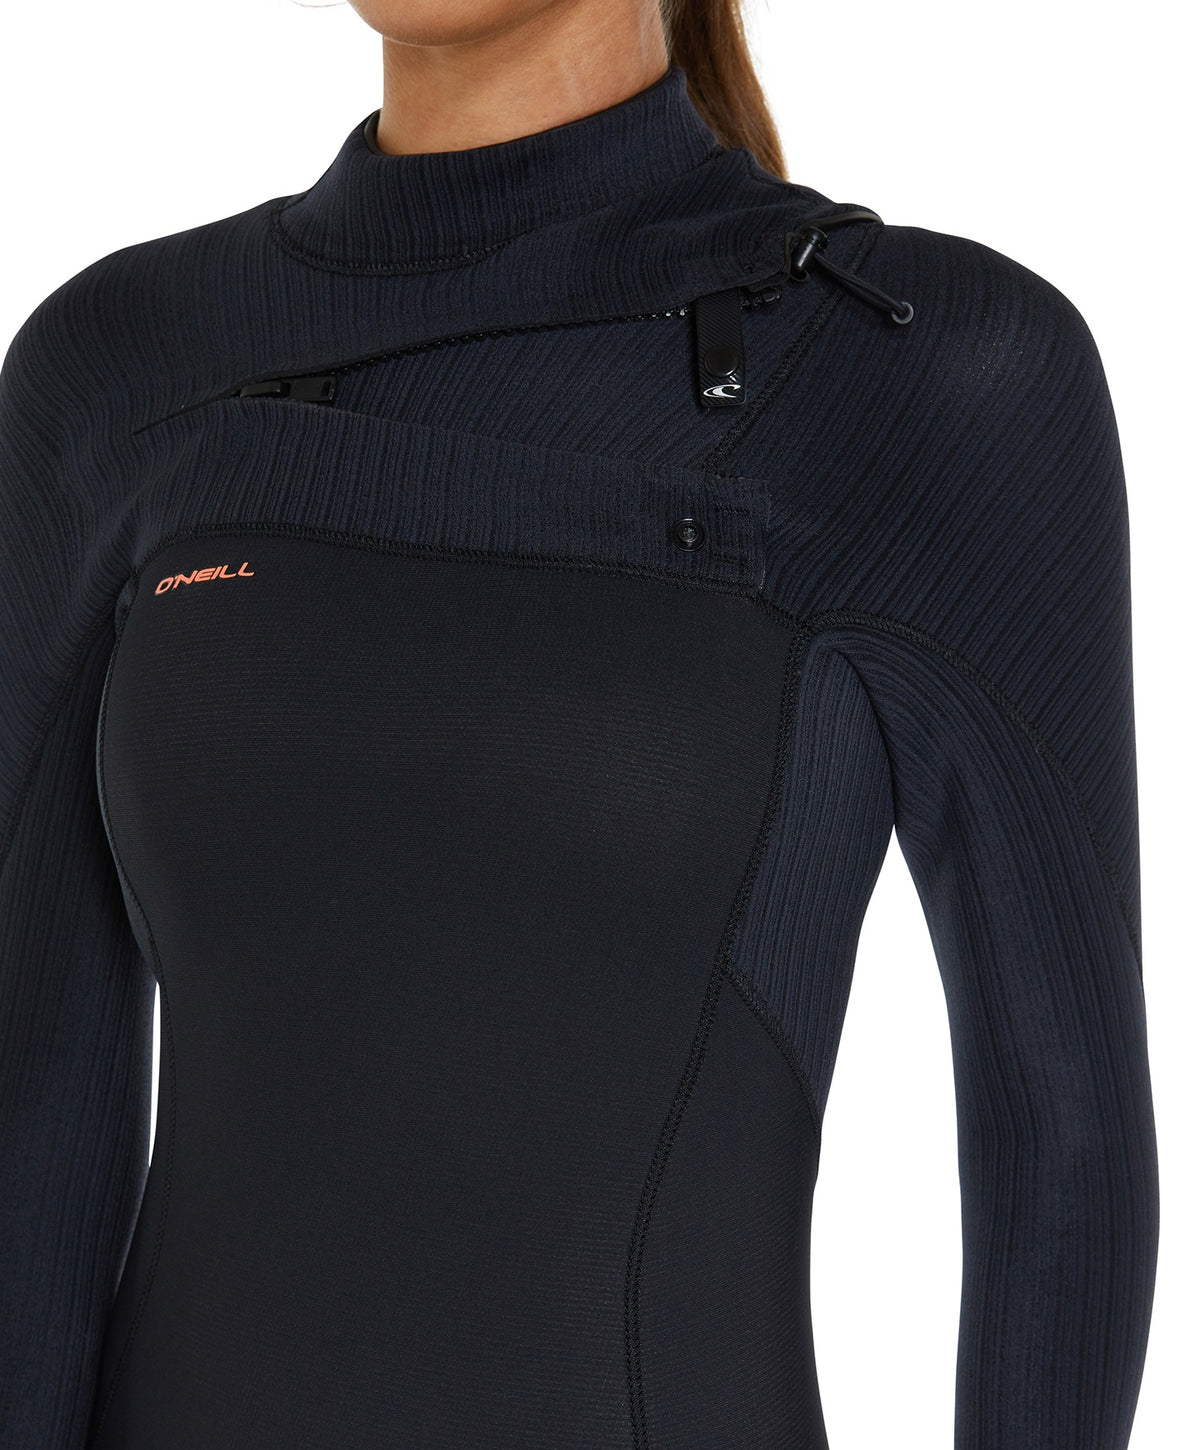 Womens Hyperfreak 4/3+ Steamer Chest Zip Wetsuit - Black